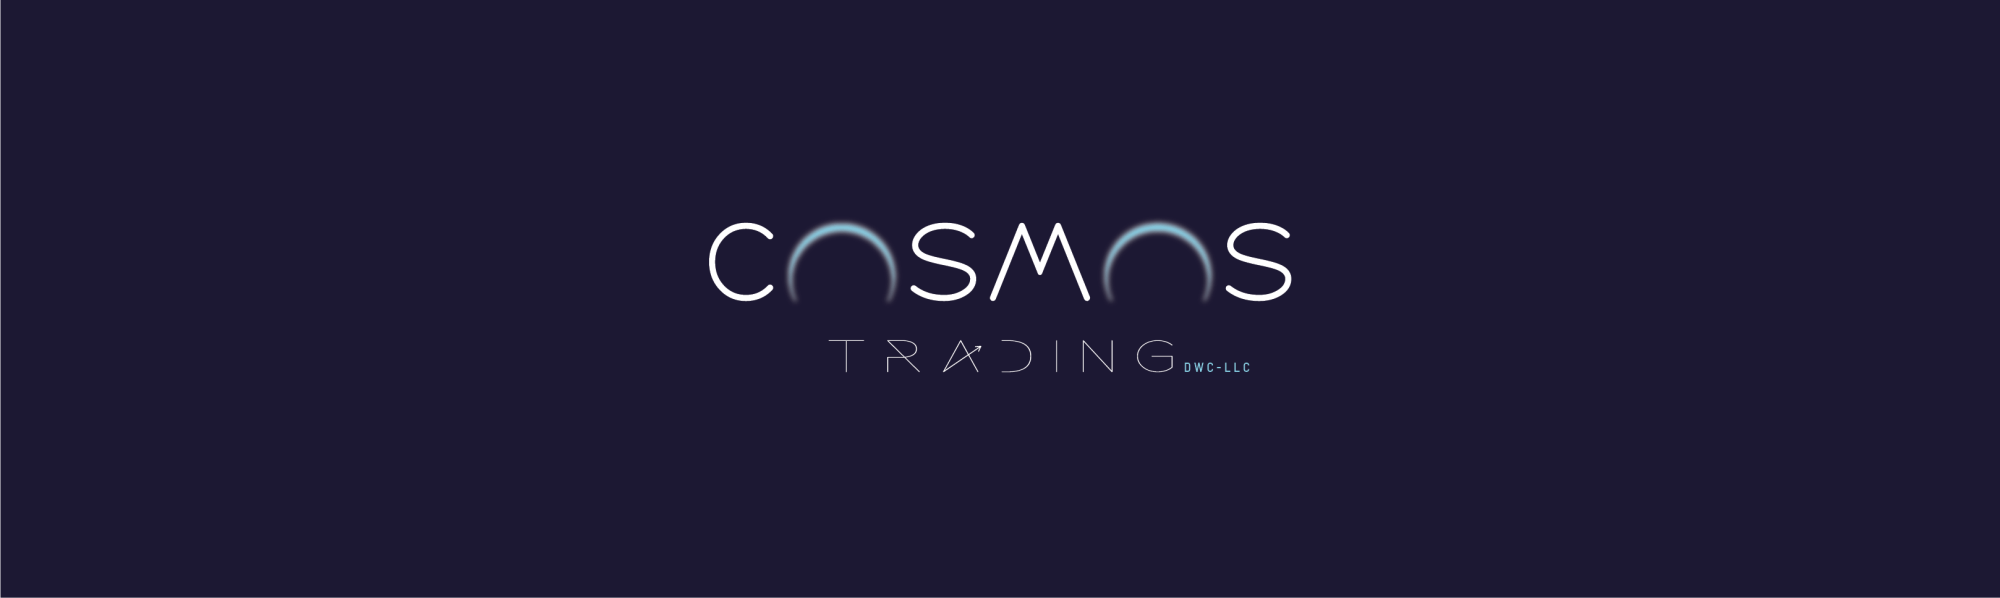 Cosmos Trading DWC-LLC